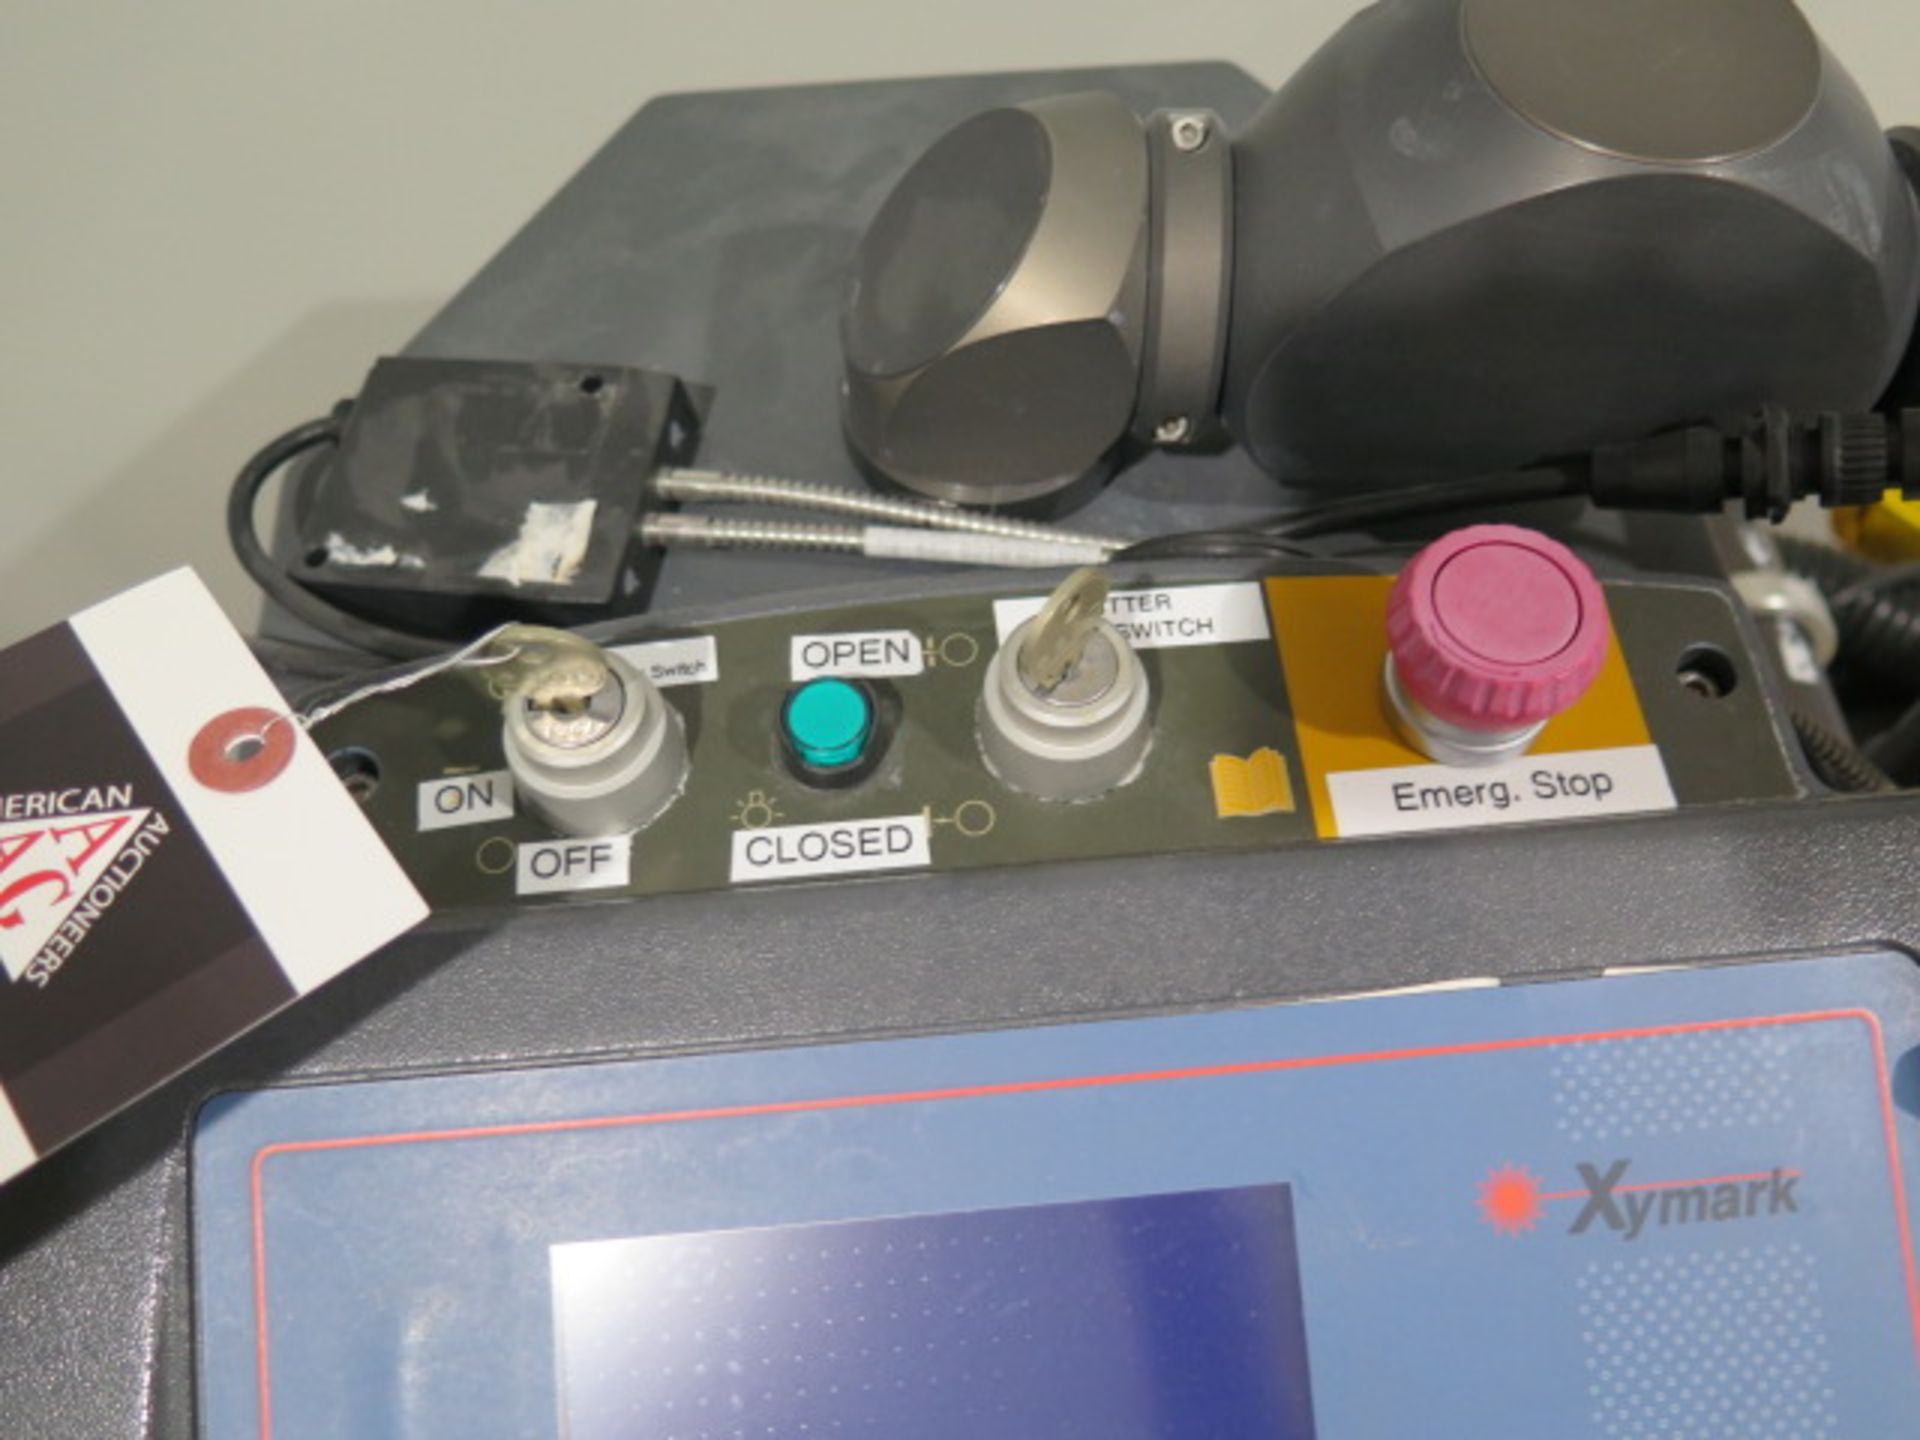 Lumonics XYMARK E.f.x Laser Marking System w/ Vacuum System (SOLD AS-IS - NO WARRANTY) - Image 10 of 14